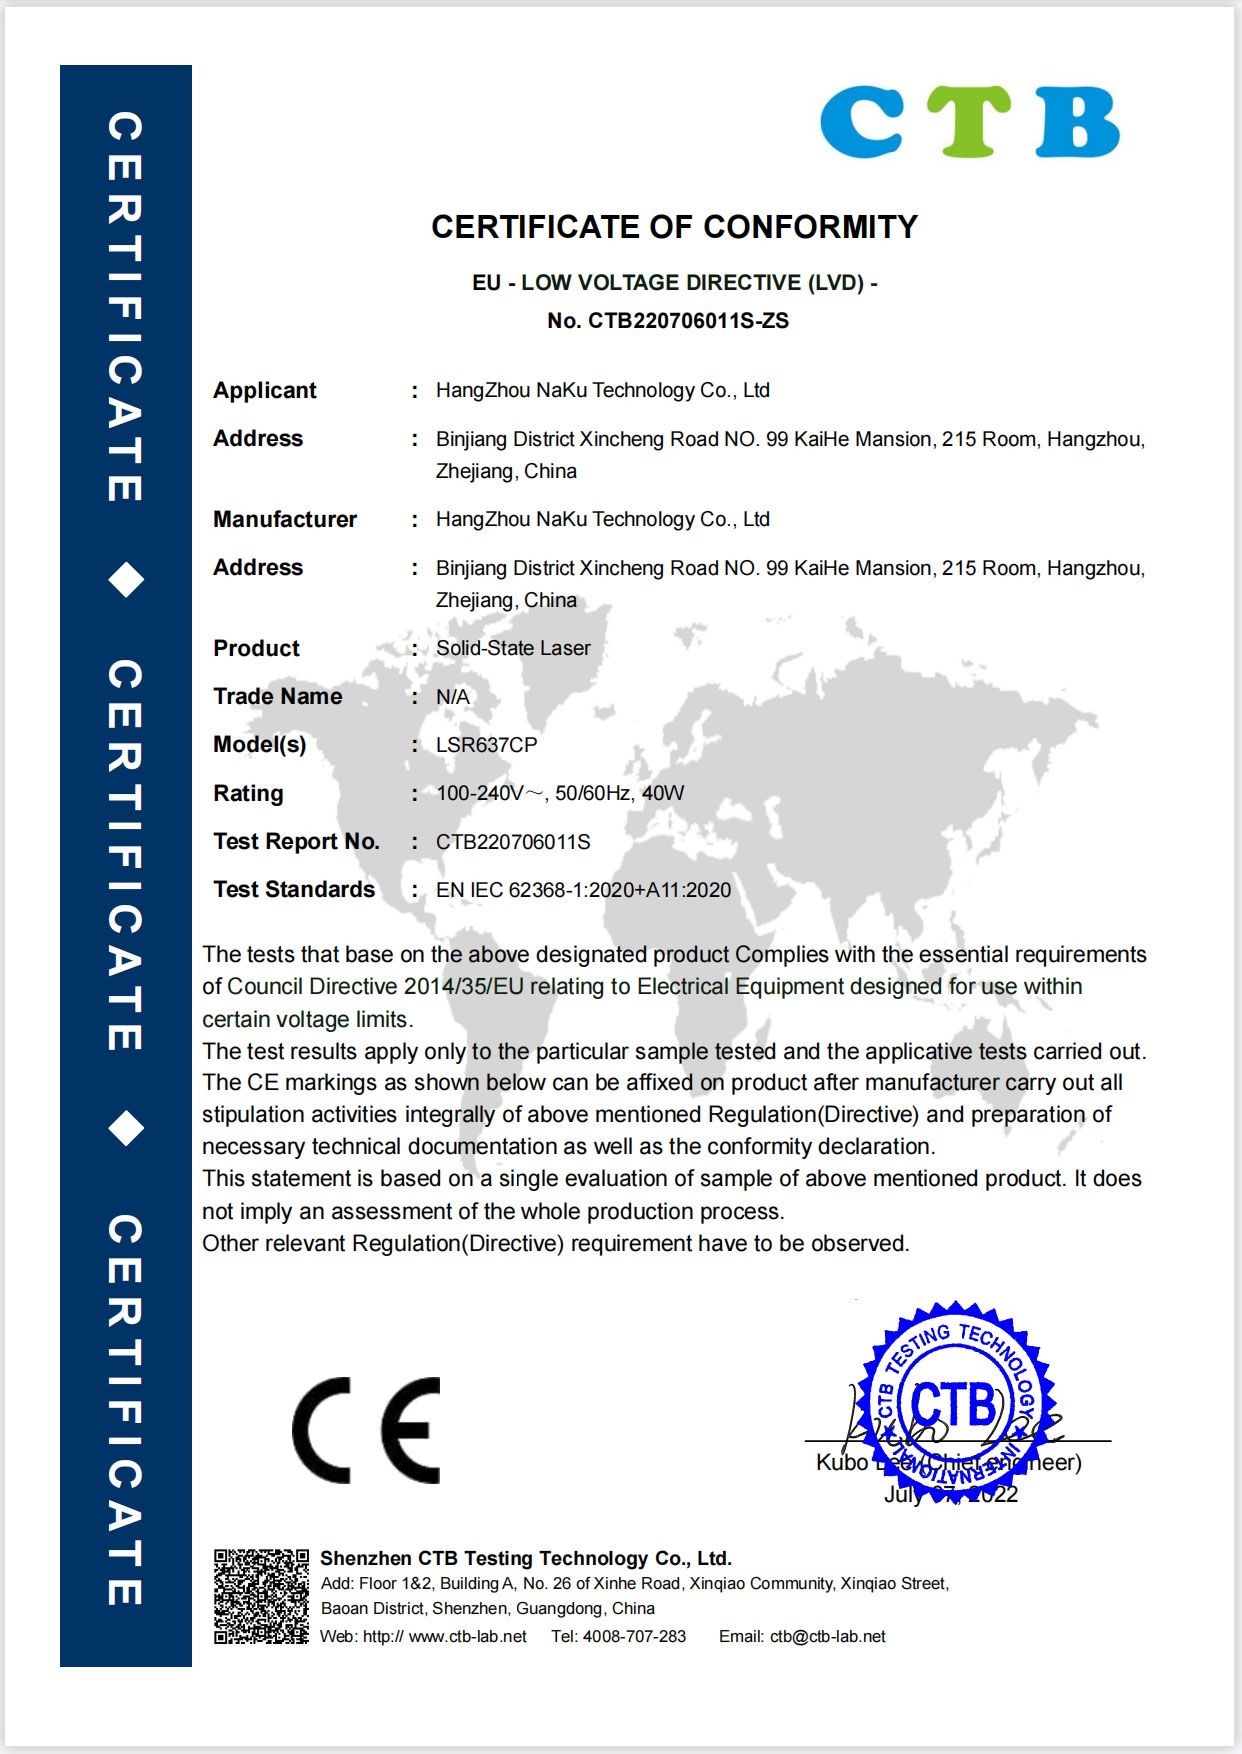 CE-LVD-Certification for Solid-State Laser.